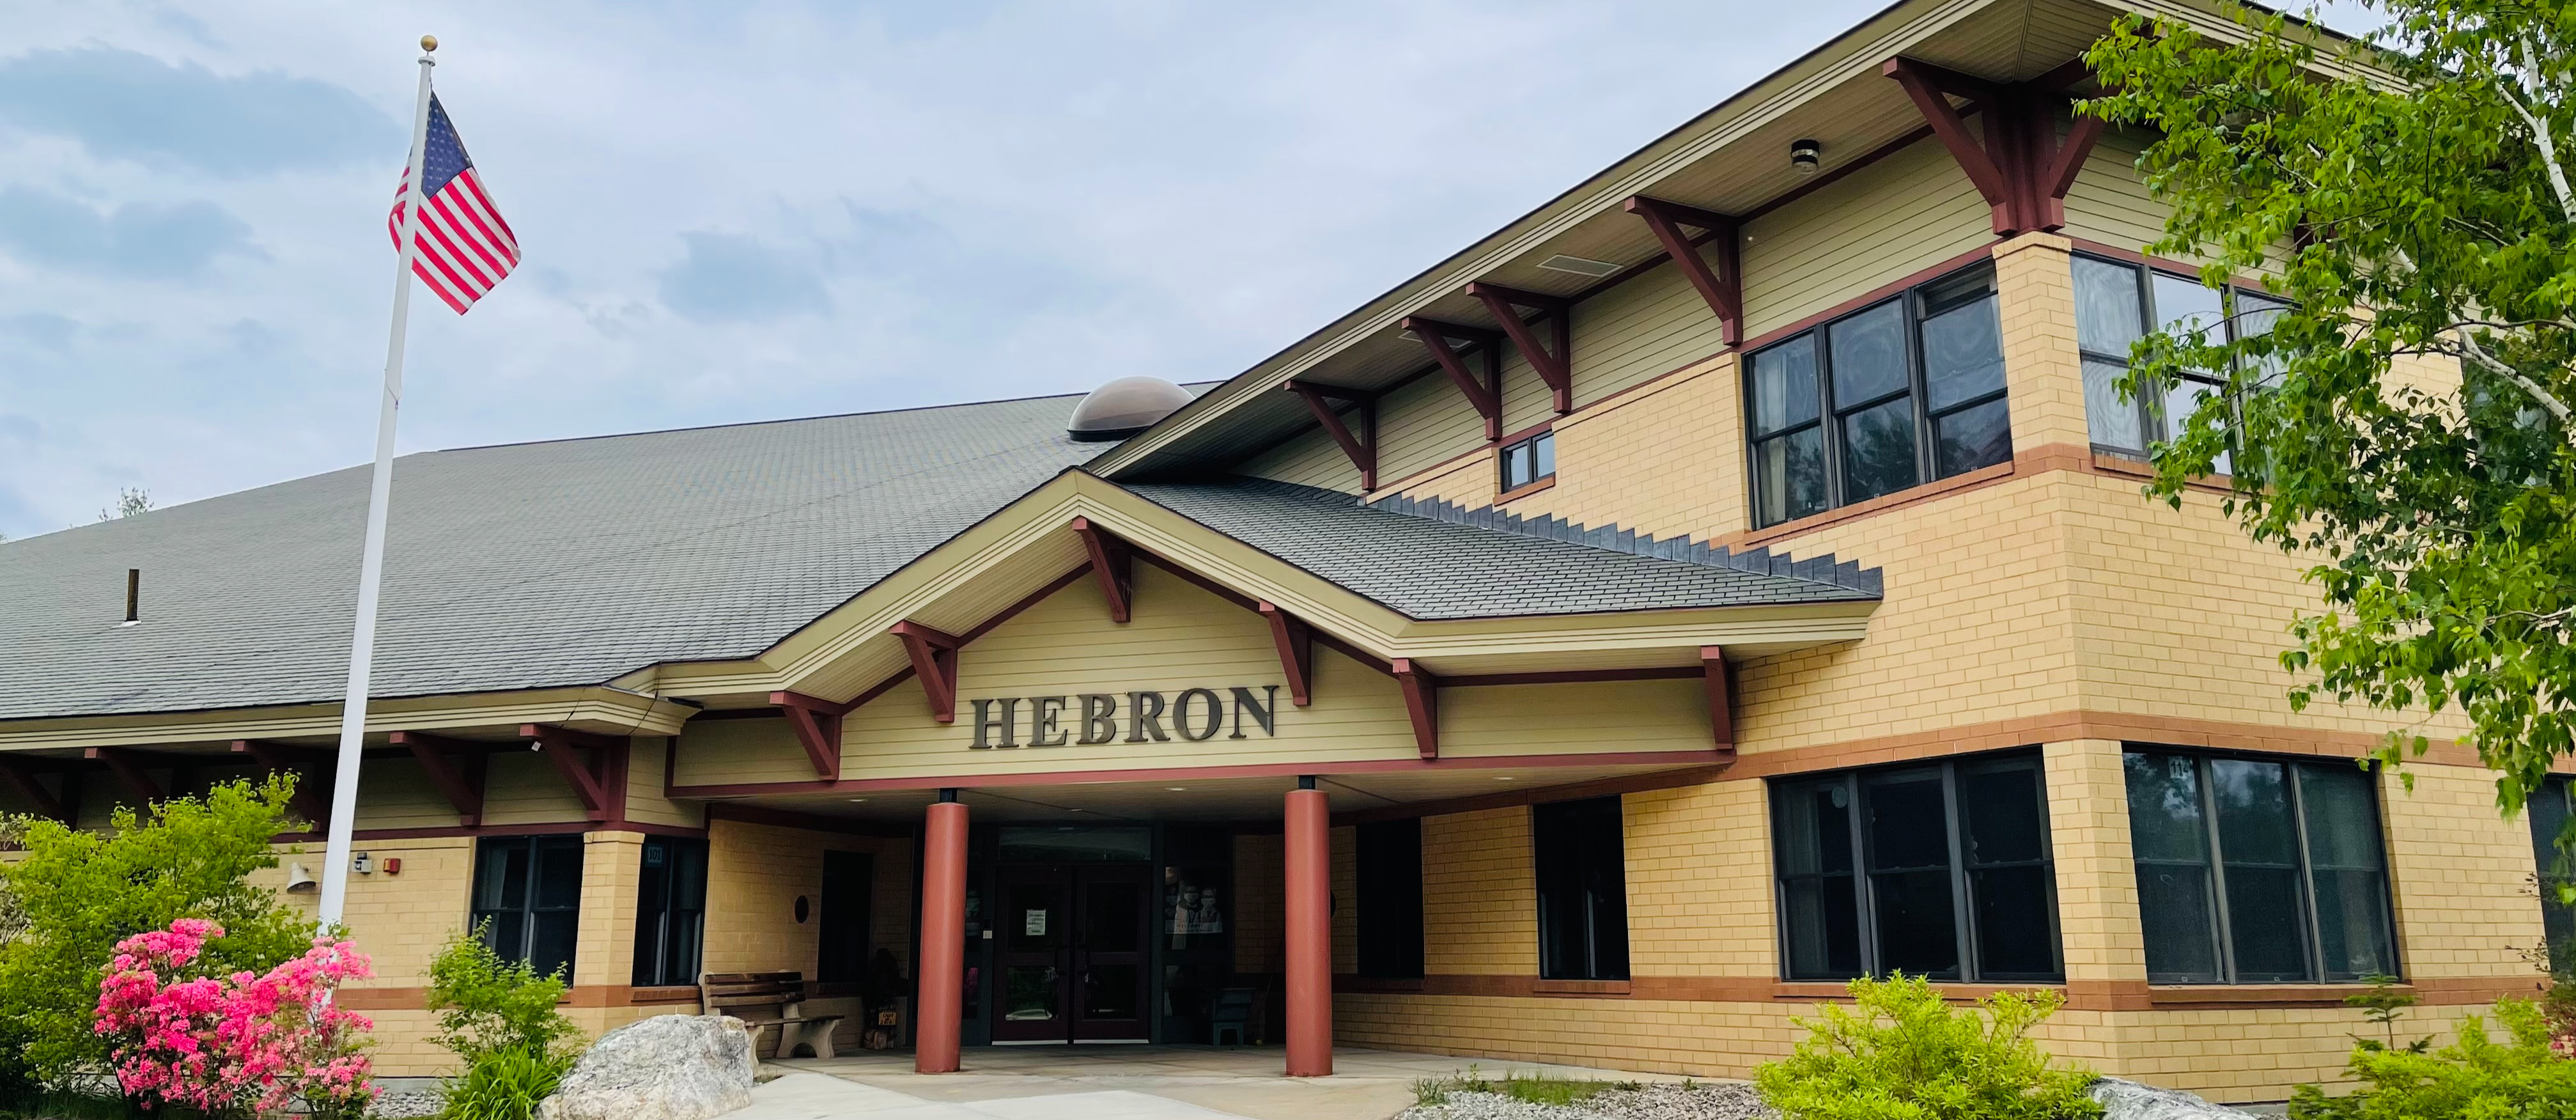 Hebron Station School